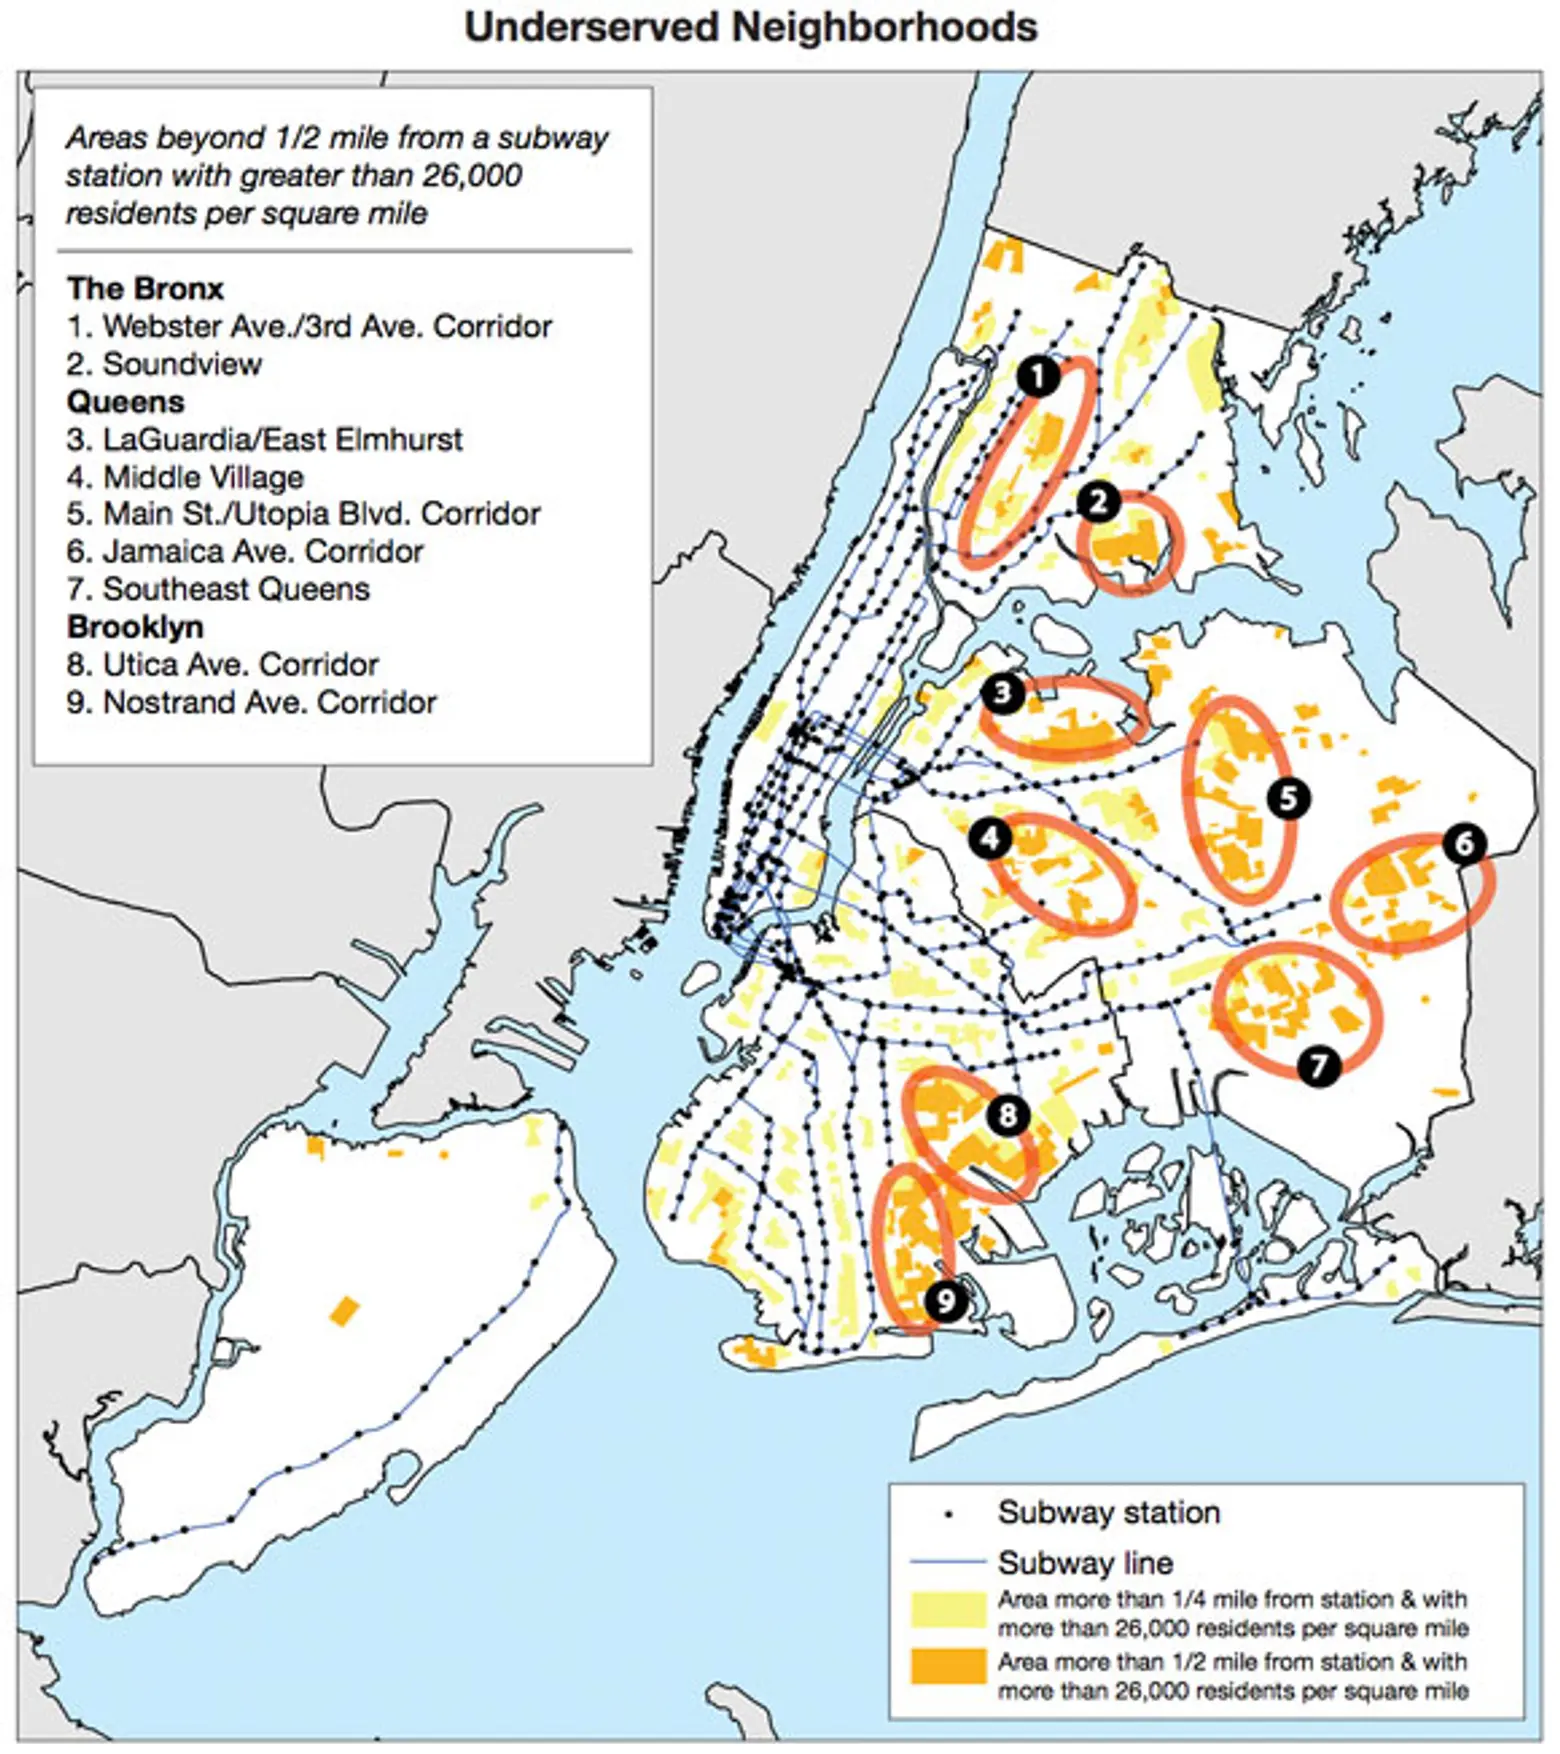 NYC subway-underserved neighborhoods